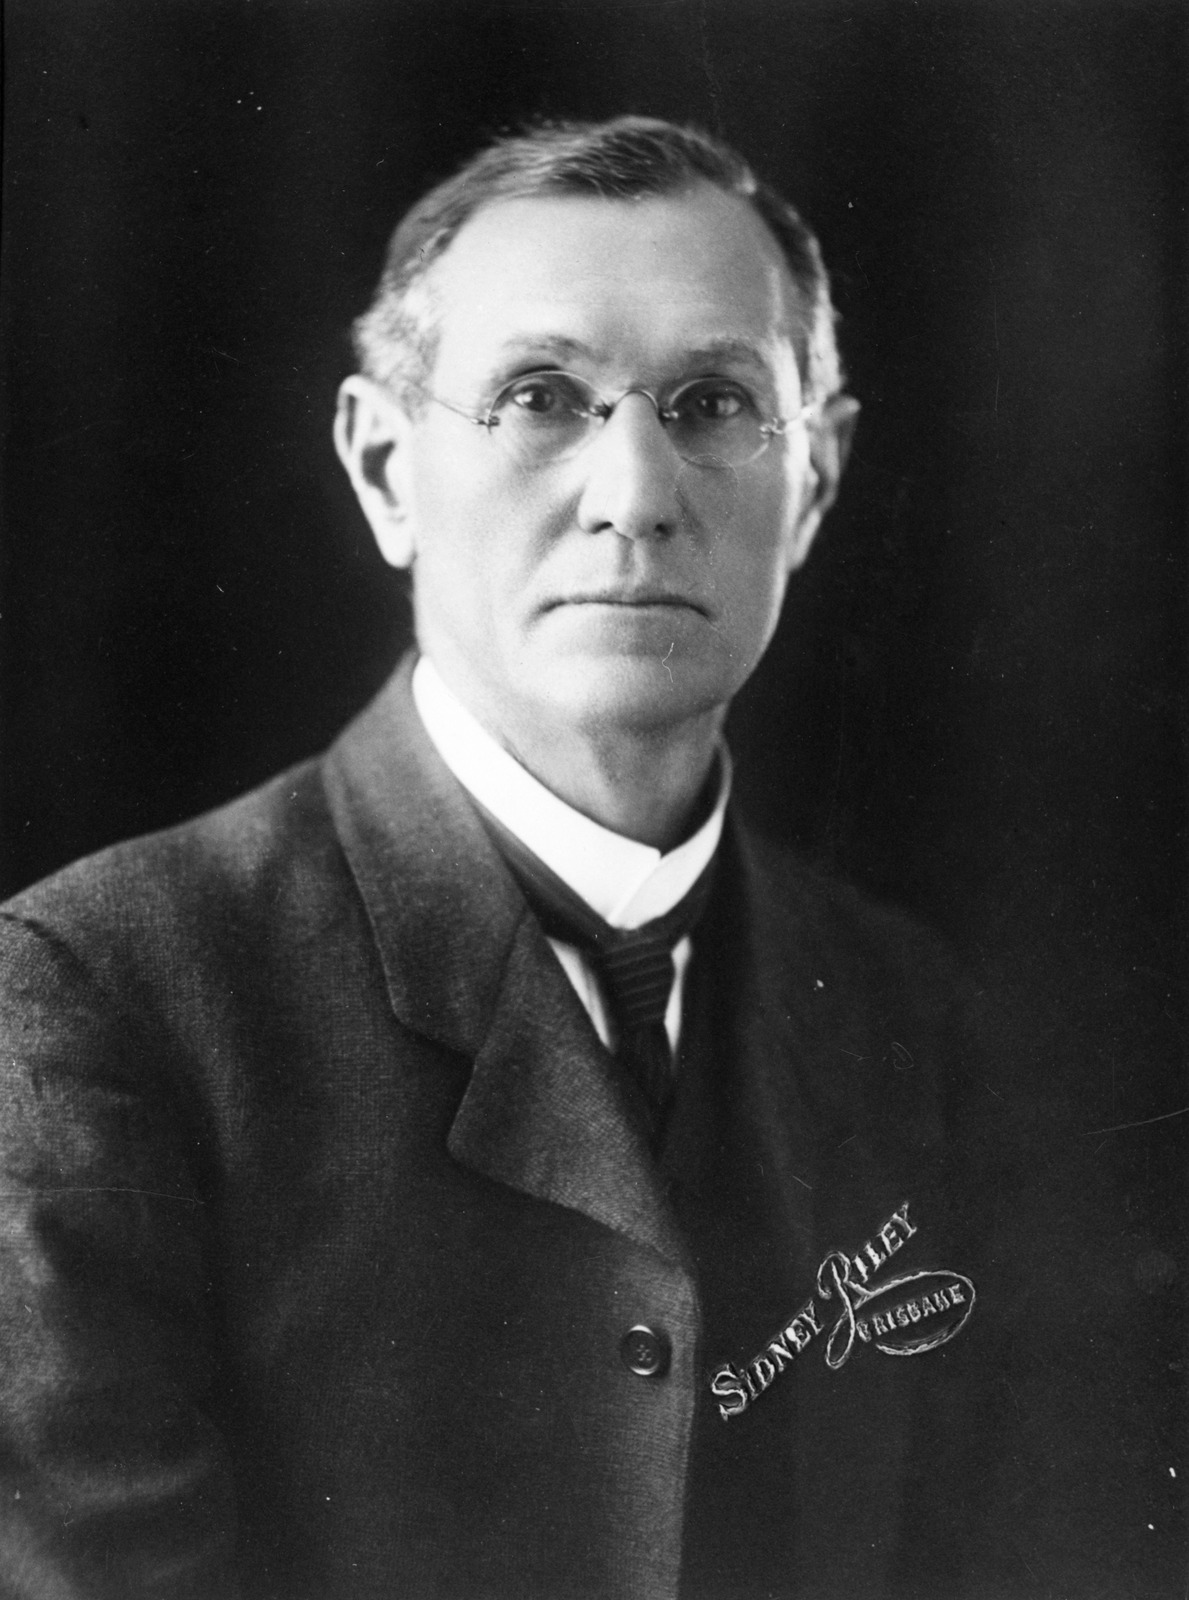 Judge Charles Stumm